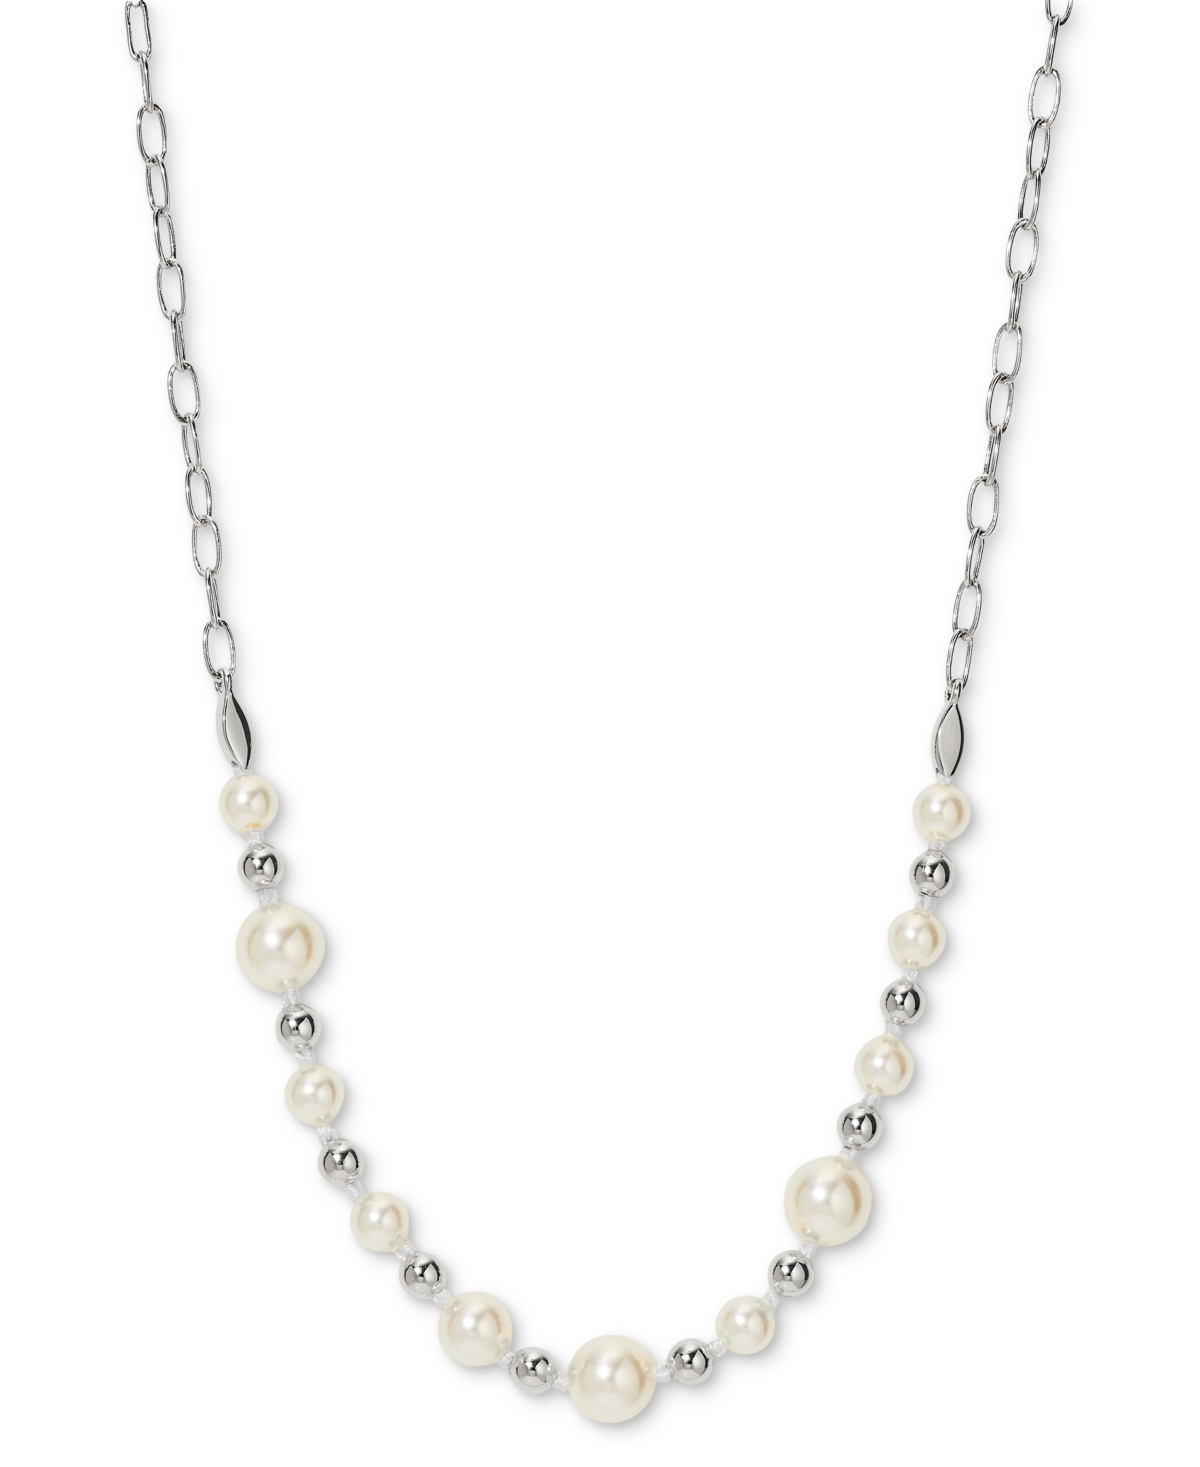 by Nadri Silver-Tone Imitation Pearl Statement Necklace, 16" + 2" extender - Rhodium